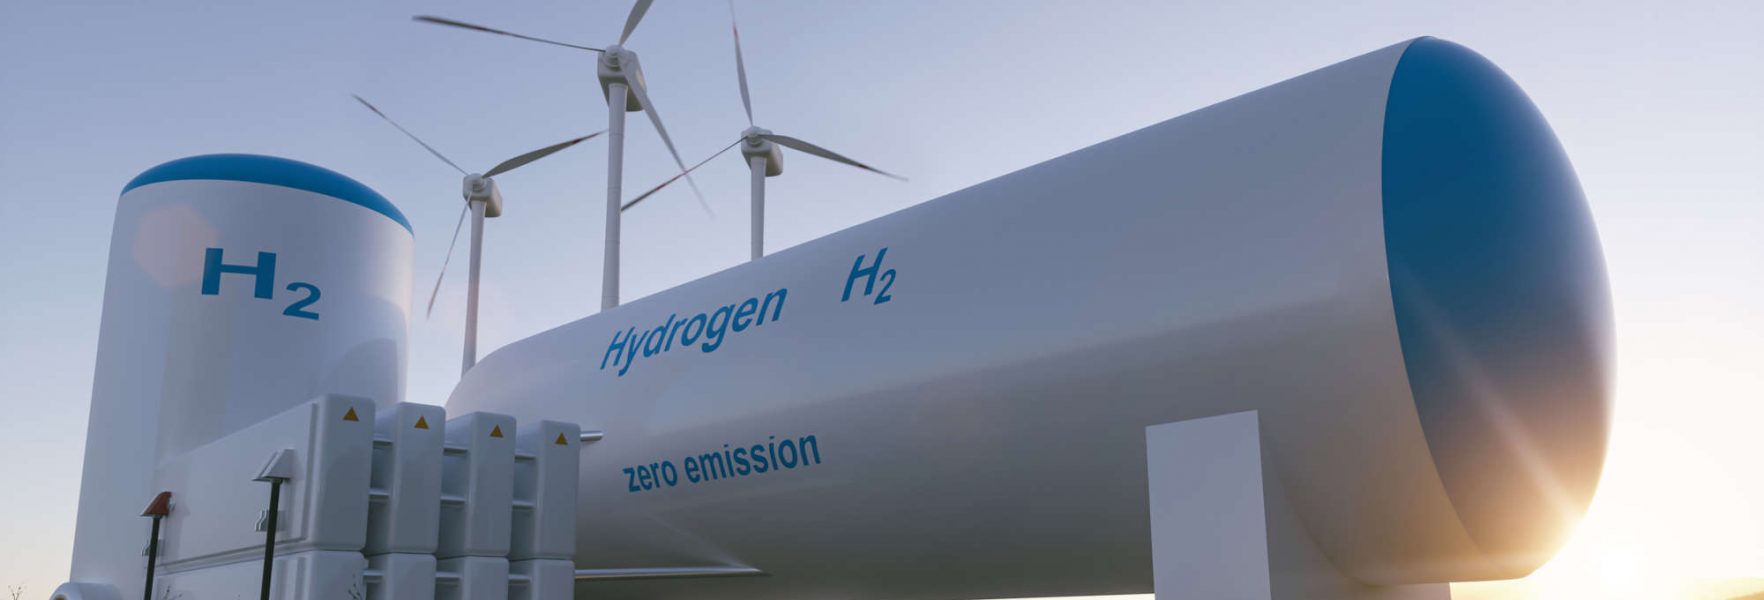 Hydrogen plant